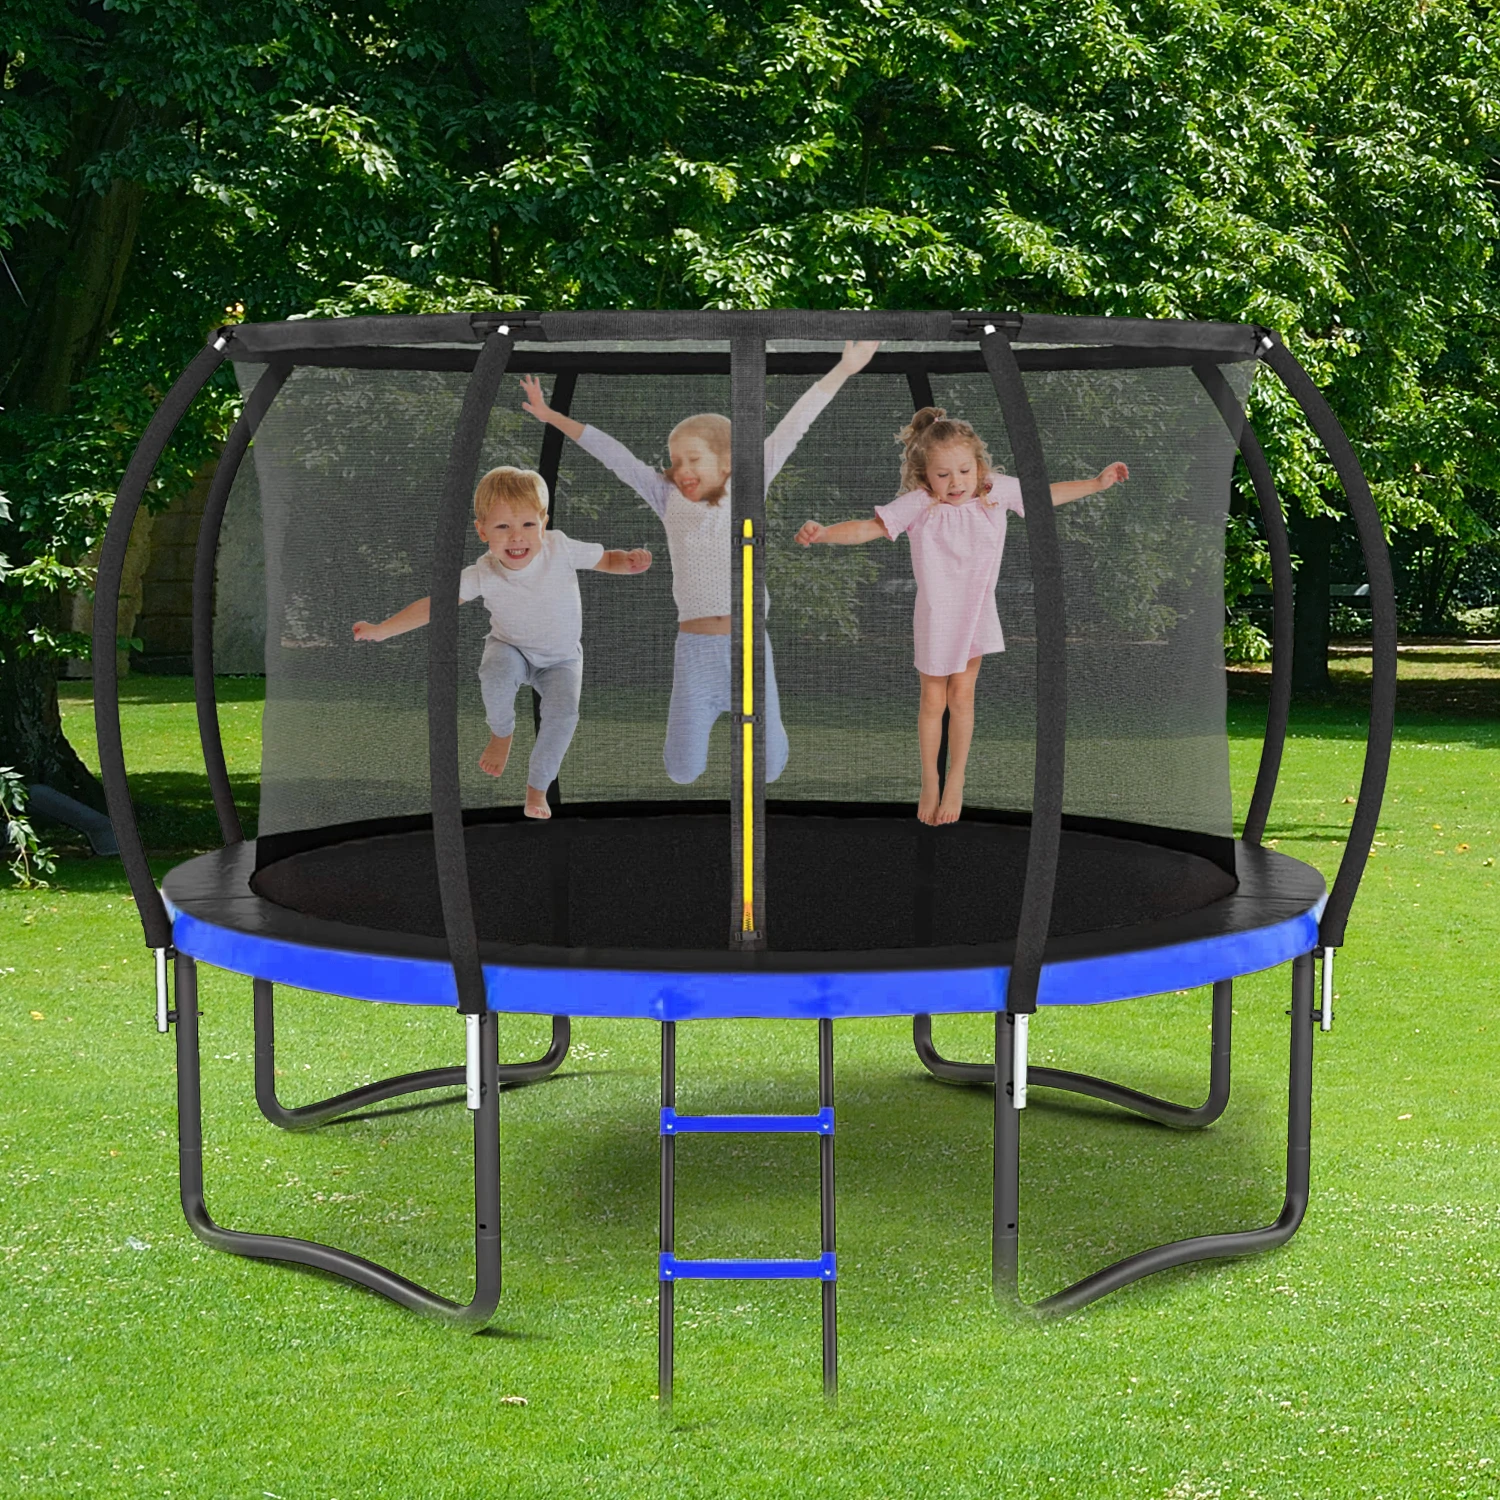 

14FT Outdoor Big Trampoline With Inner Safety Enclosure Net, Ladder, PVC Spring Cover Padding, For Kids, Black&Blue Color